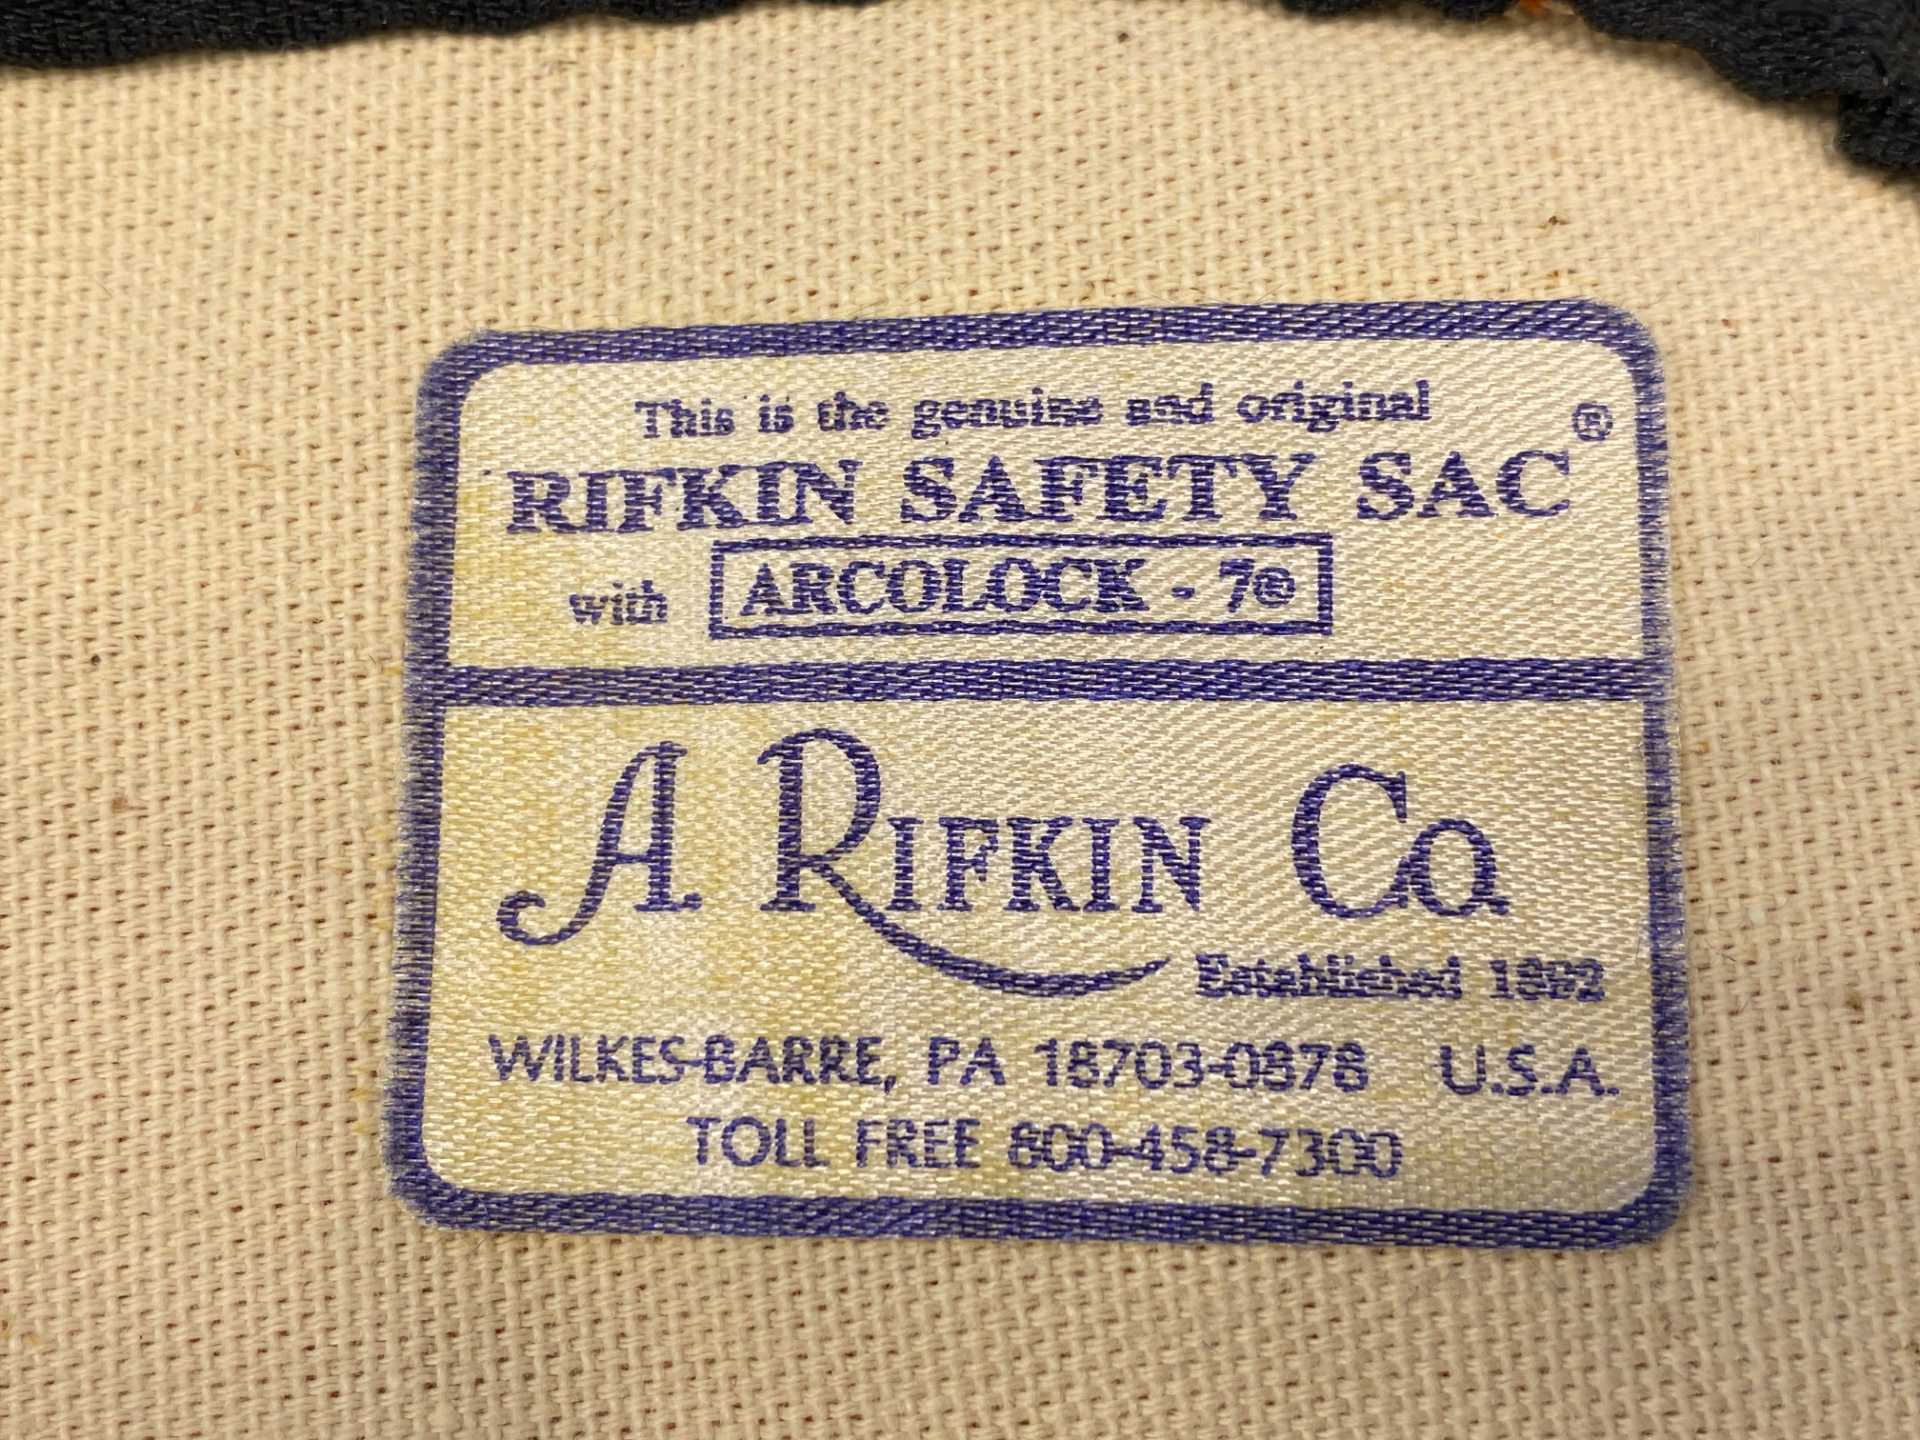 Vintage University of Texas Bank Bag Rifkin Safety w/ Arcolock 9"x11" (Orange)